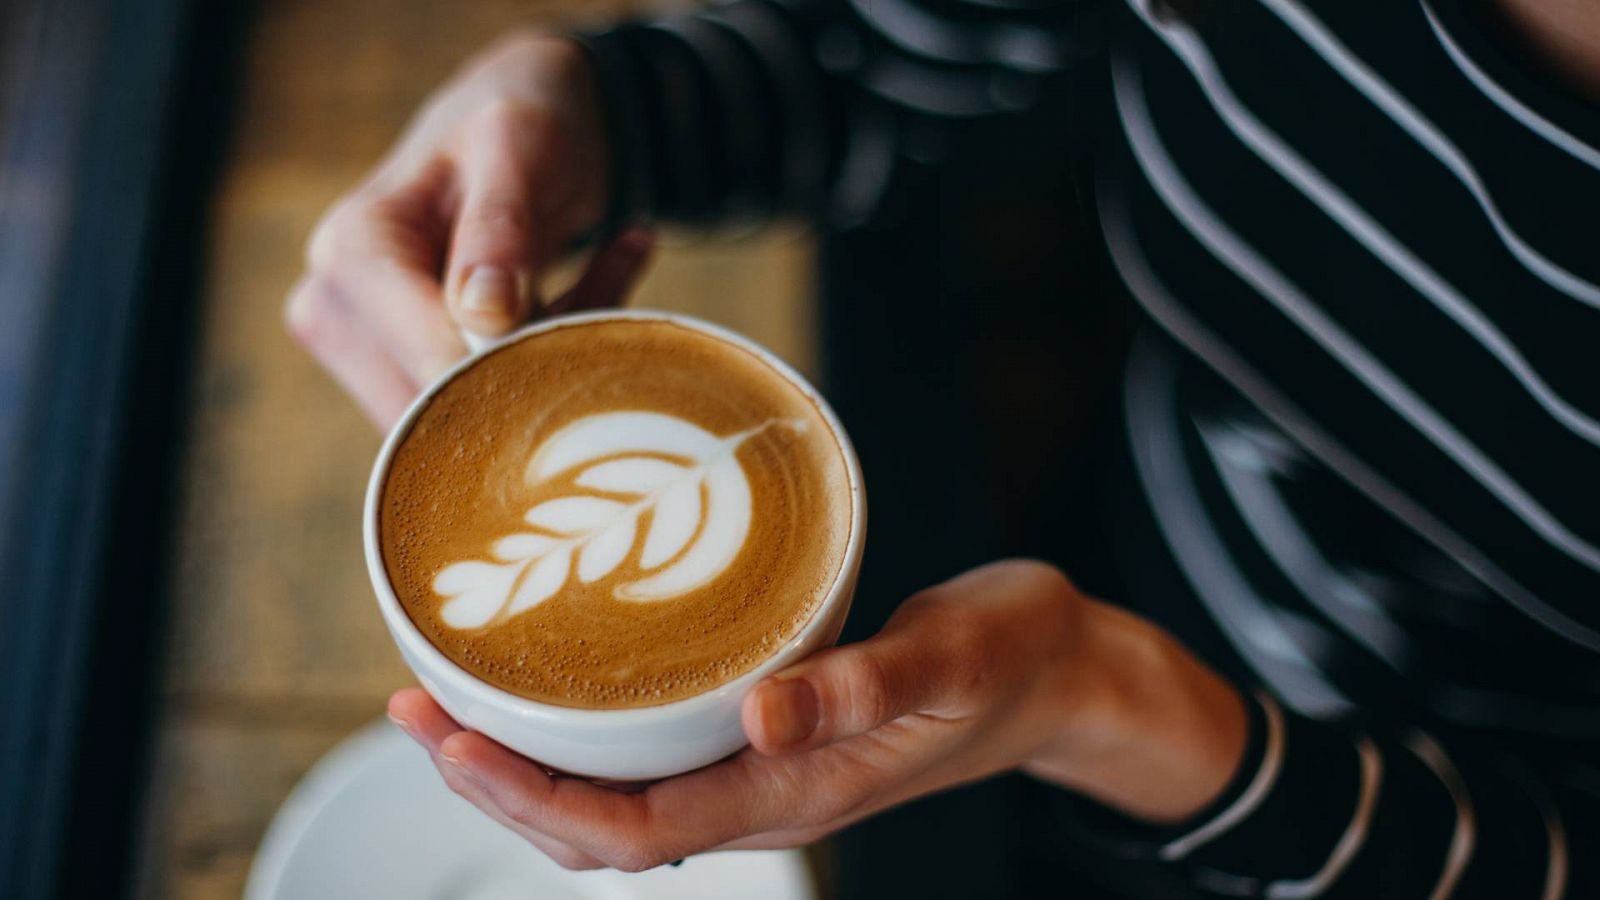 Cápsulas de café o café molido: ¿cuál es más sano?